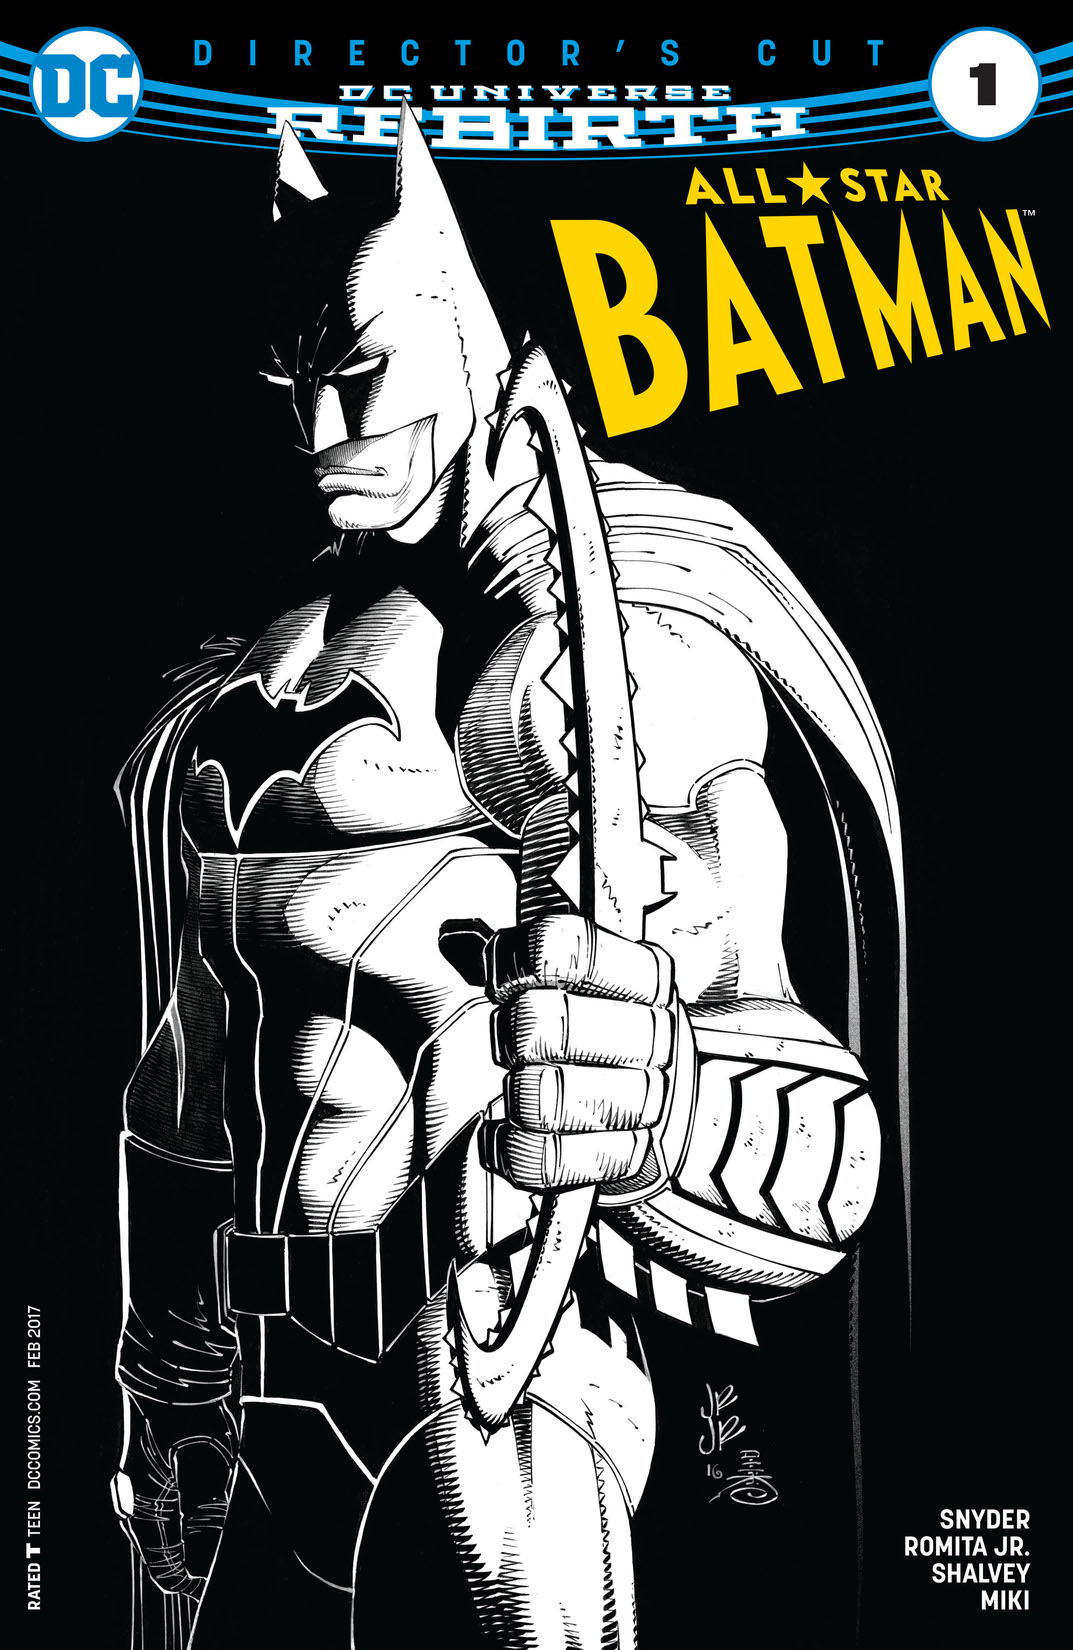 All Star Batman #1 Director's Cut #1 preview images